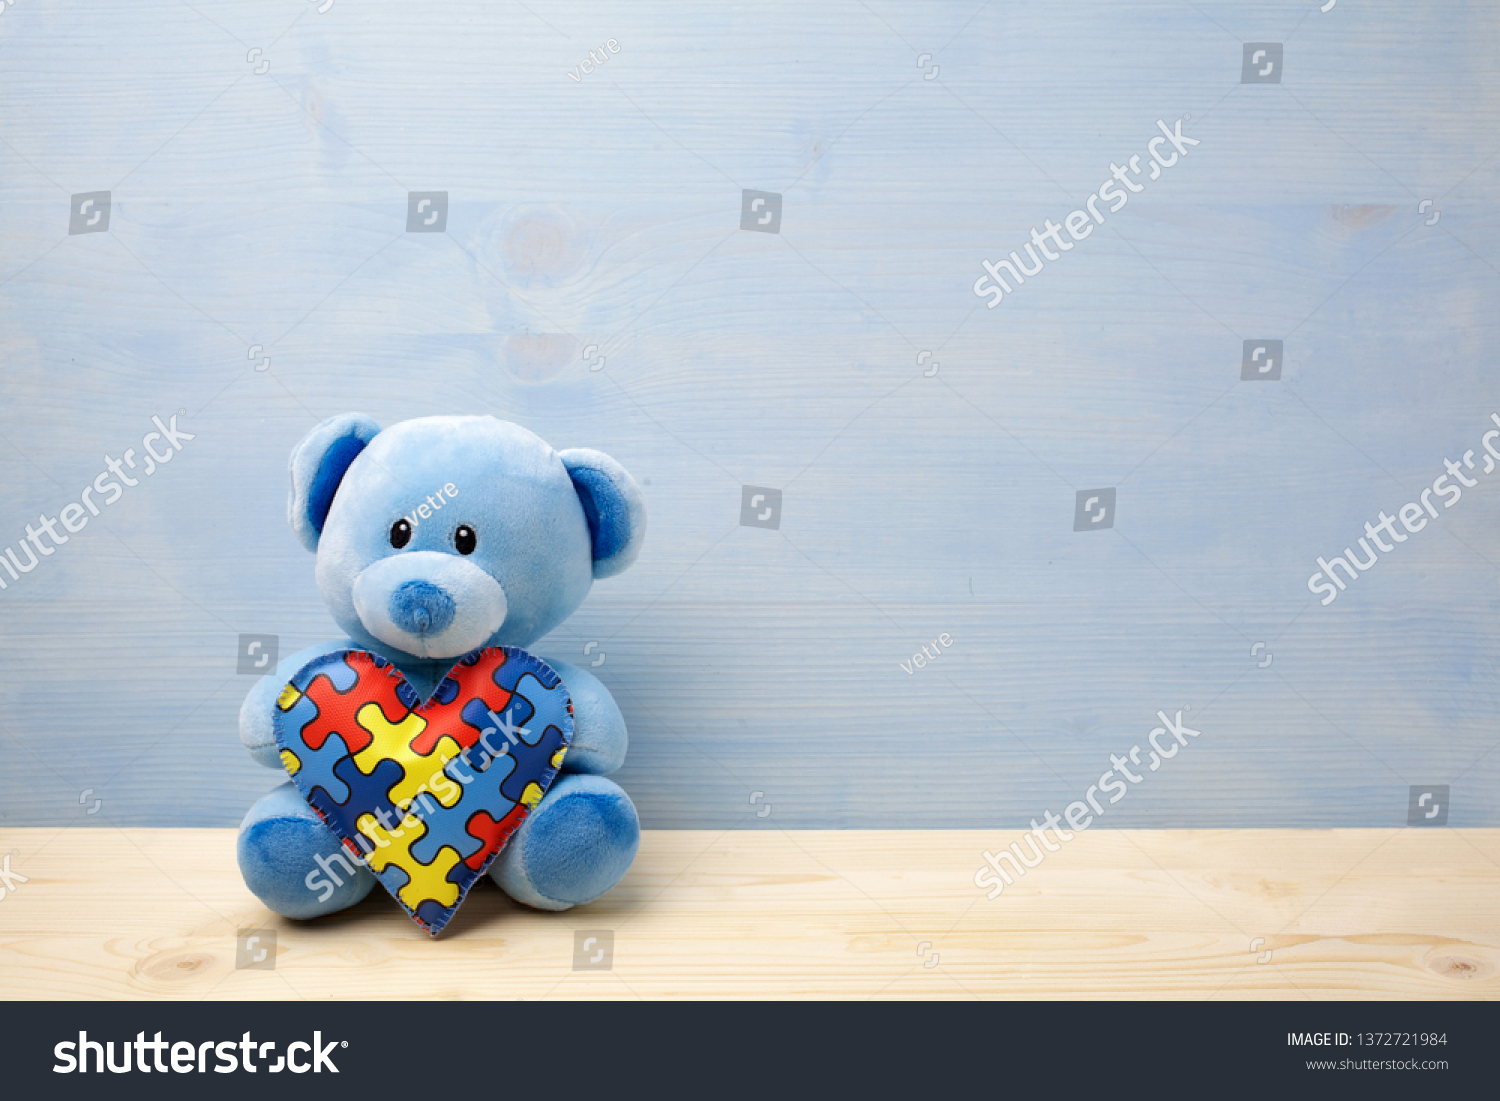 world teddy bear day